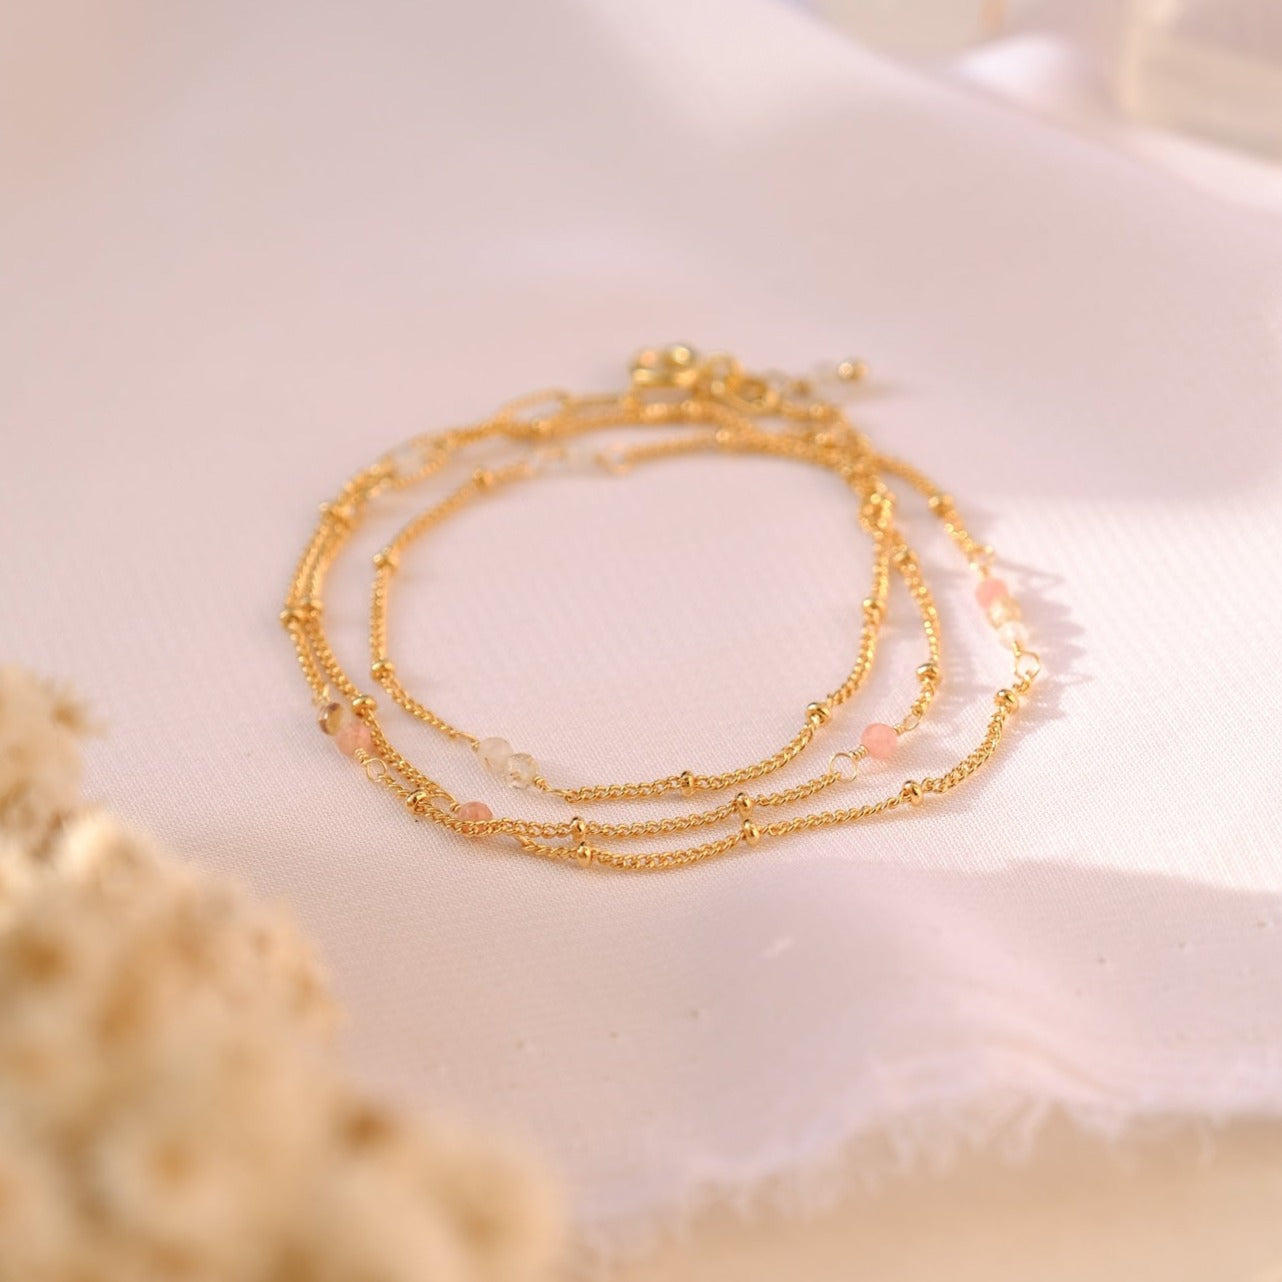 Bracelet-Necklace "Melissa" 3 in 1